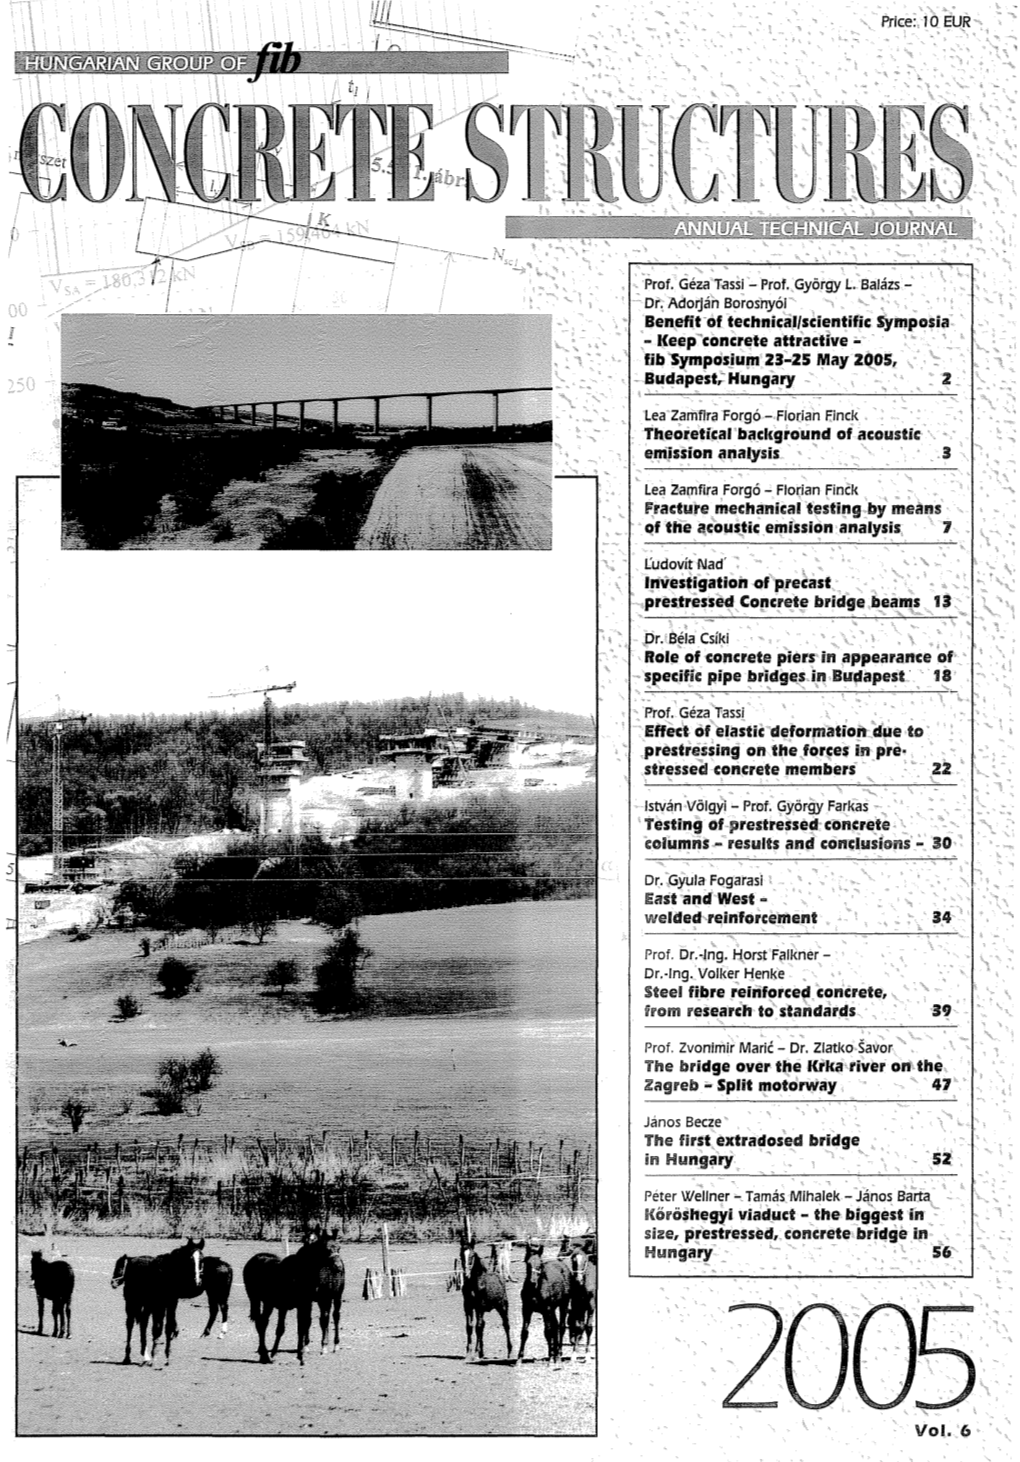 Barta. 1{@Li'oshegyi Viaduct - the Biggesti" Size, Prestressed, Concrete Inidg~Hn Hungary " 5'6